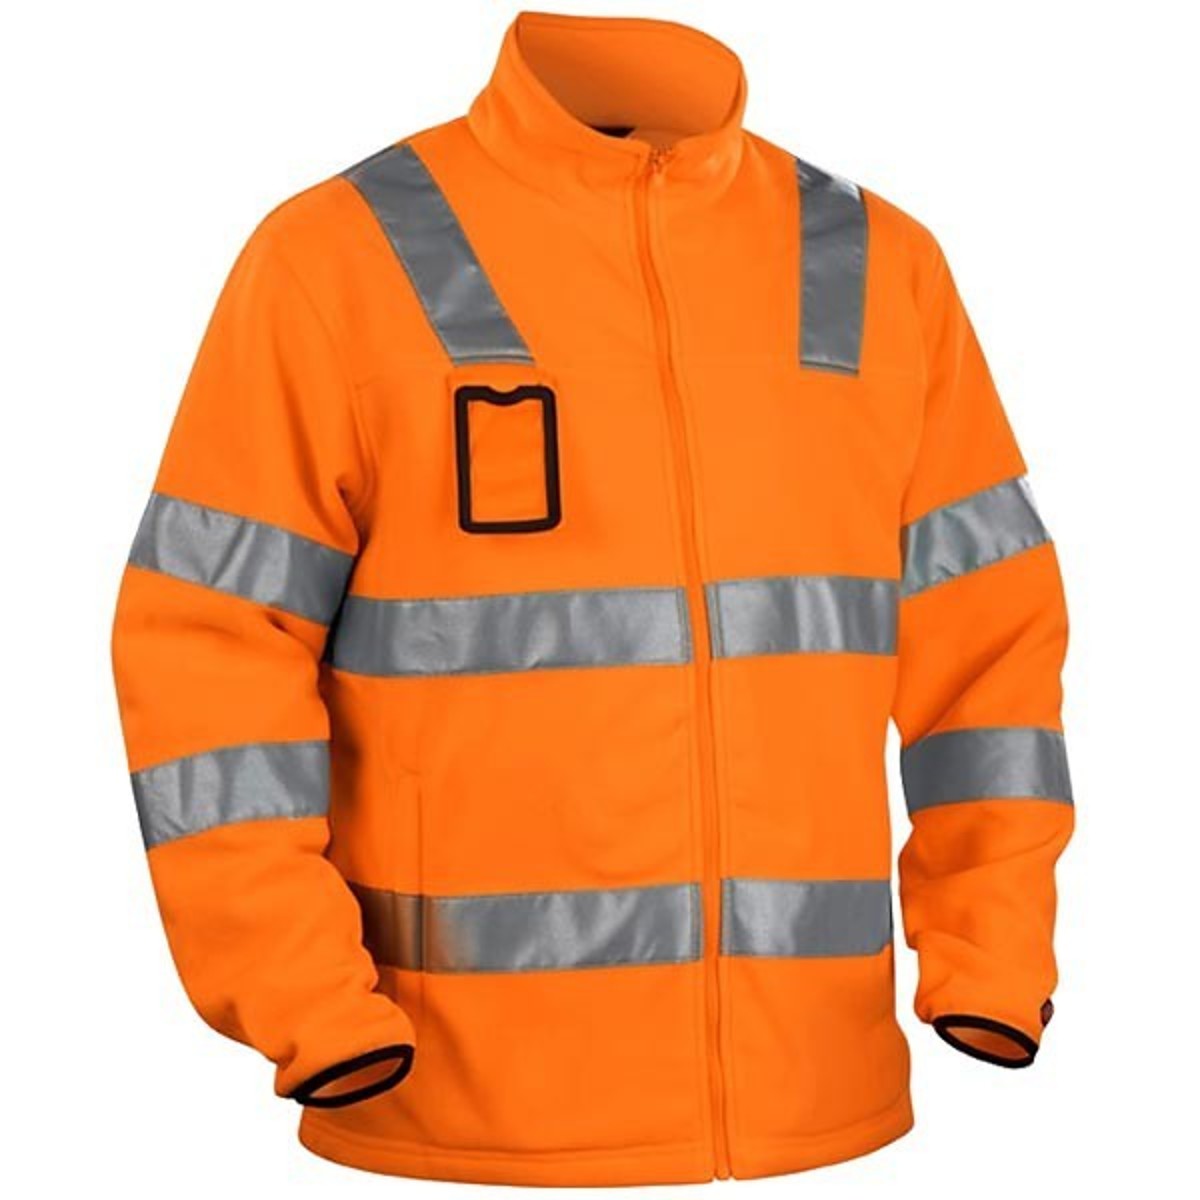 Blakläder fleece jacket warning protection 4833